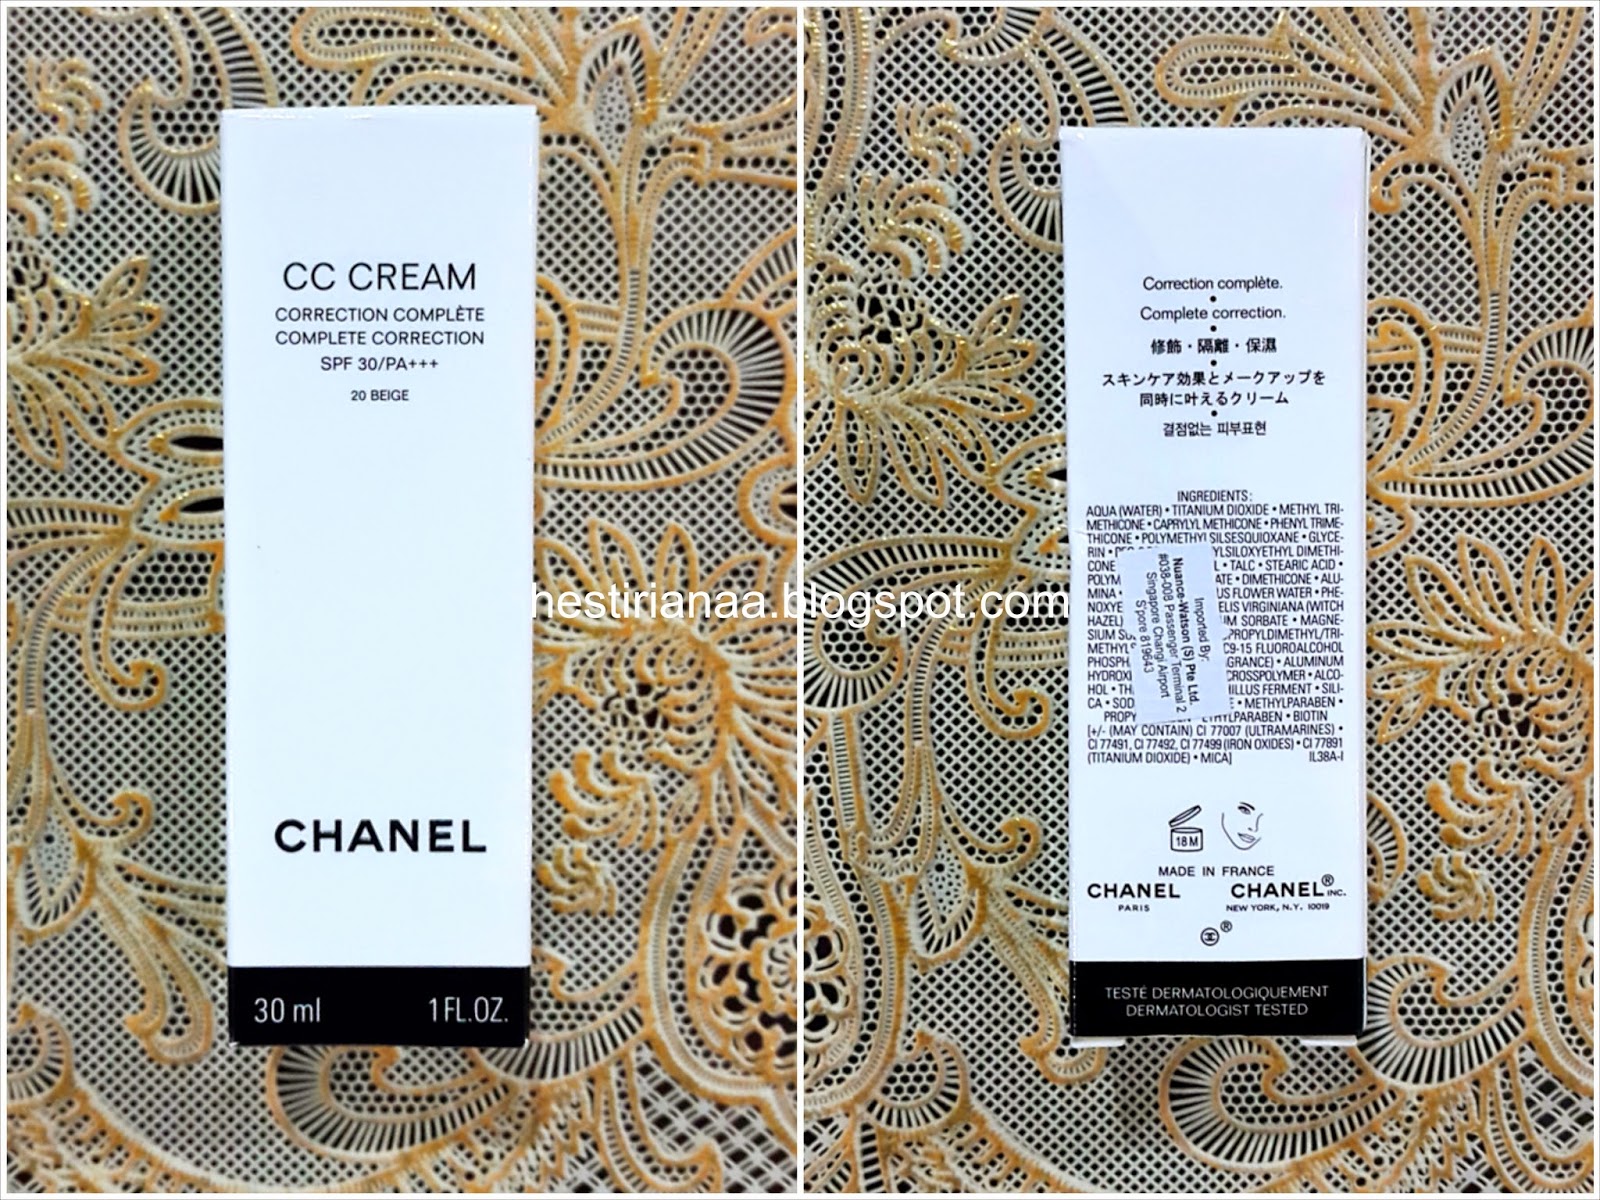 HESTI'S BEAUTY JOURNAL: (Review) : Chanel CC Cream 20 Beige